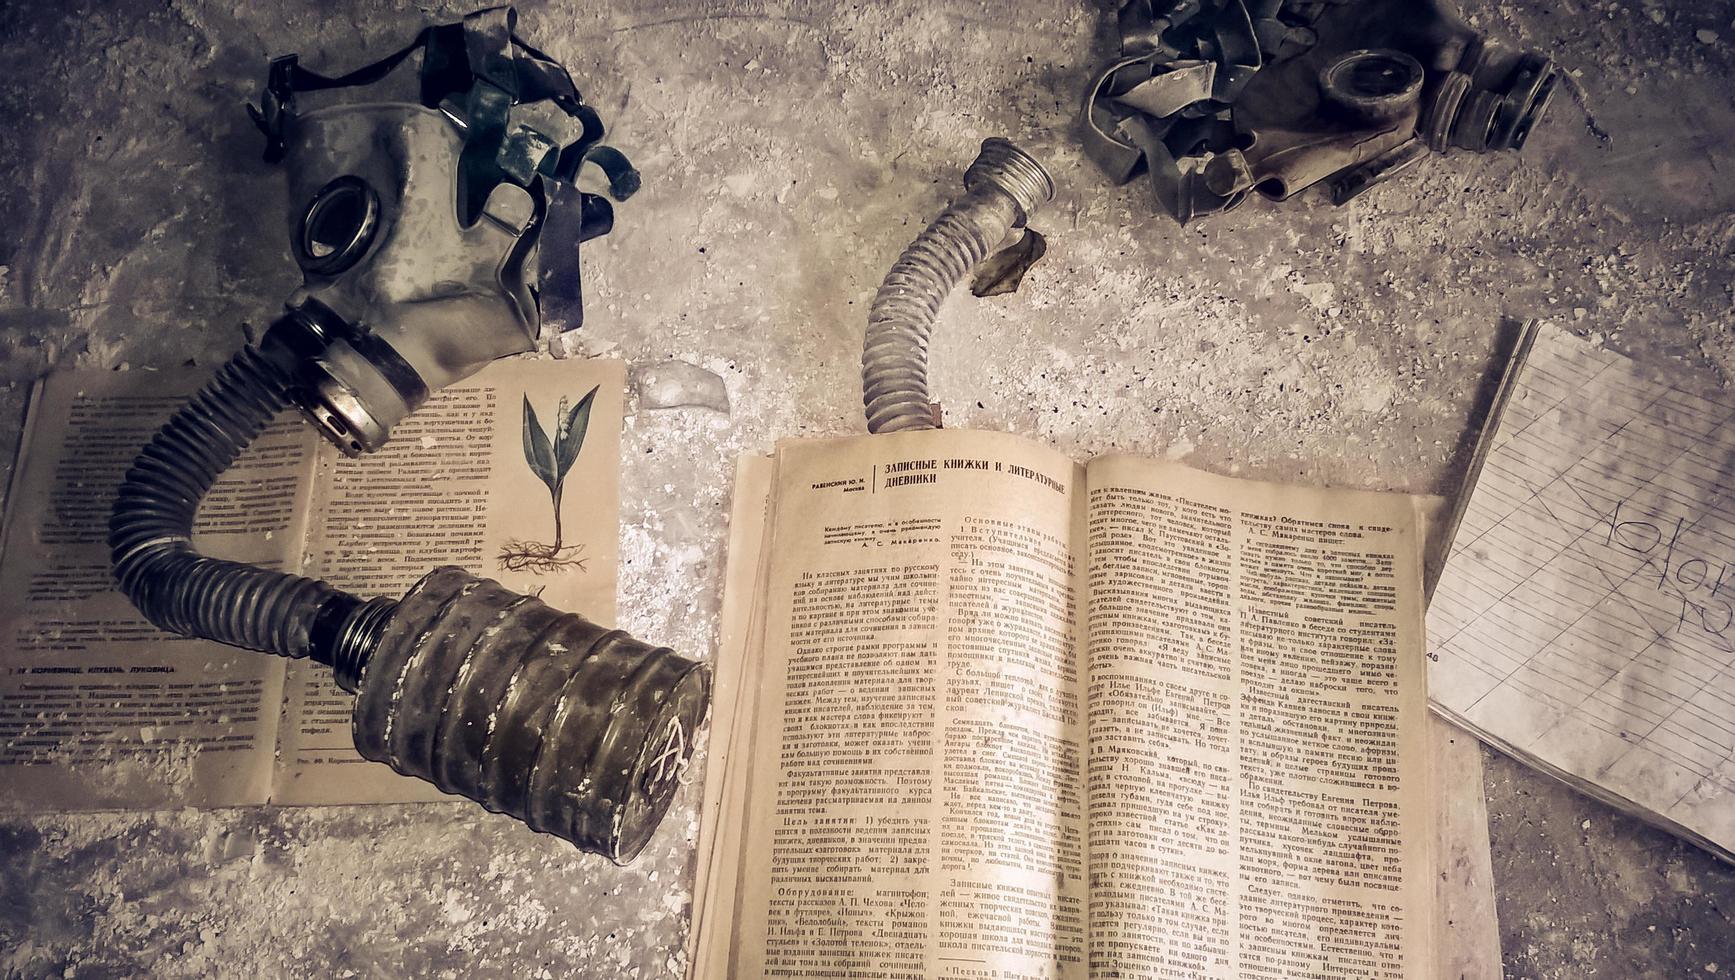 Pripyat, Ukraine, 2021 - Old books and gas masks in Chernobyl photo